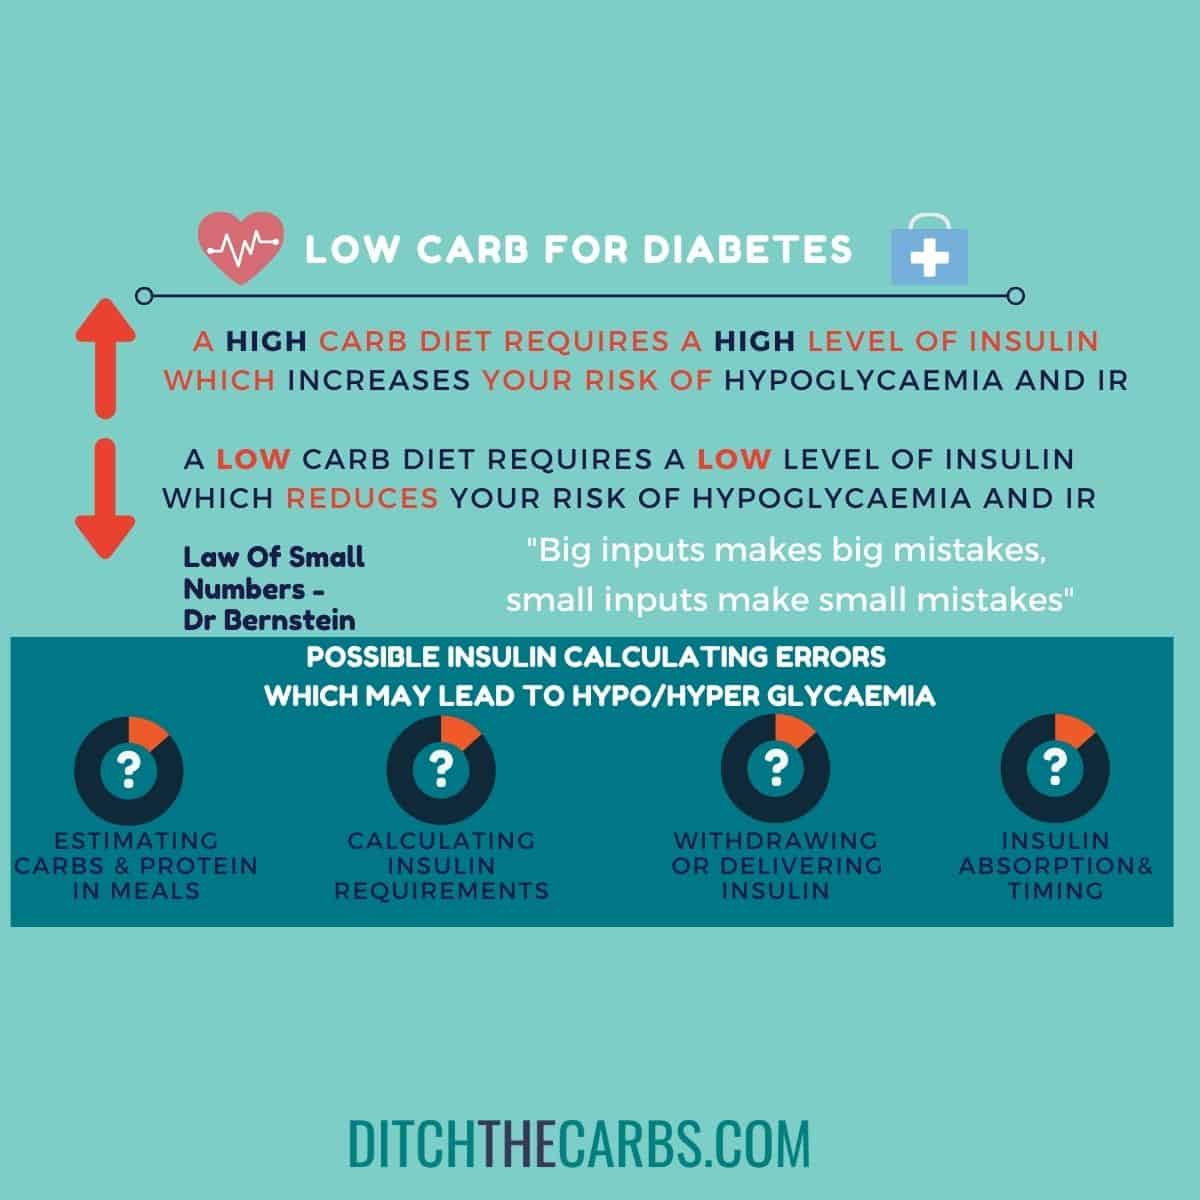 Low-carb and diabetes management